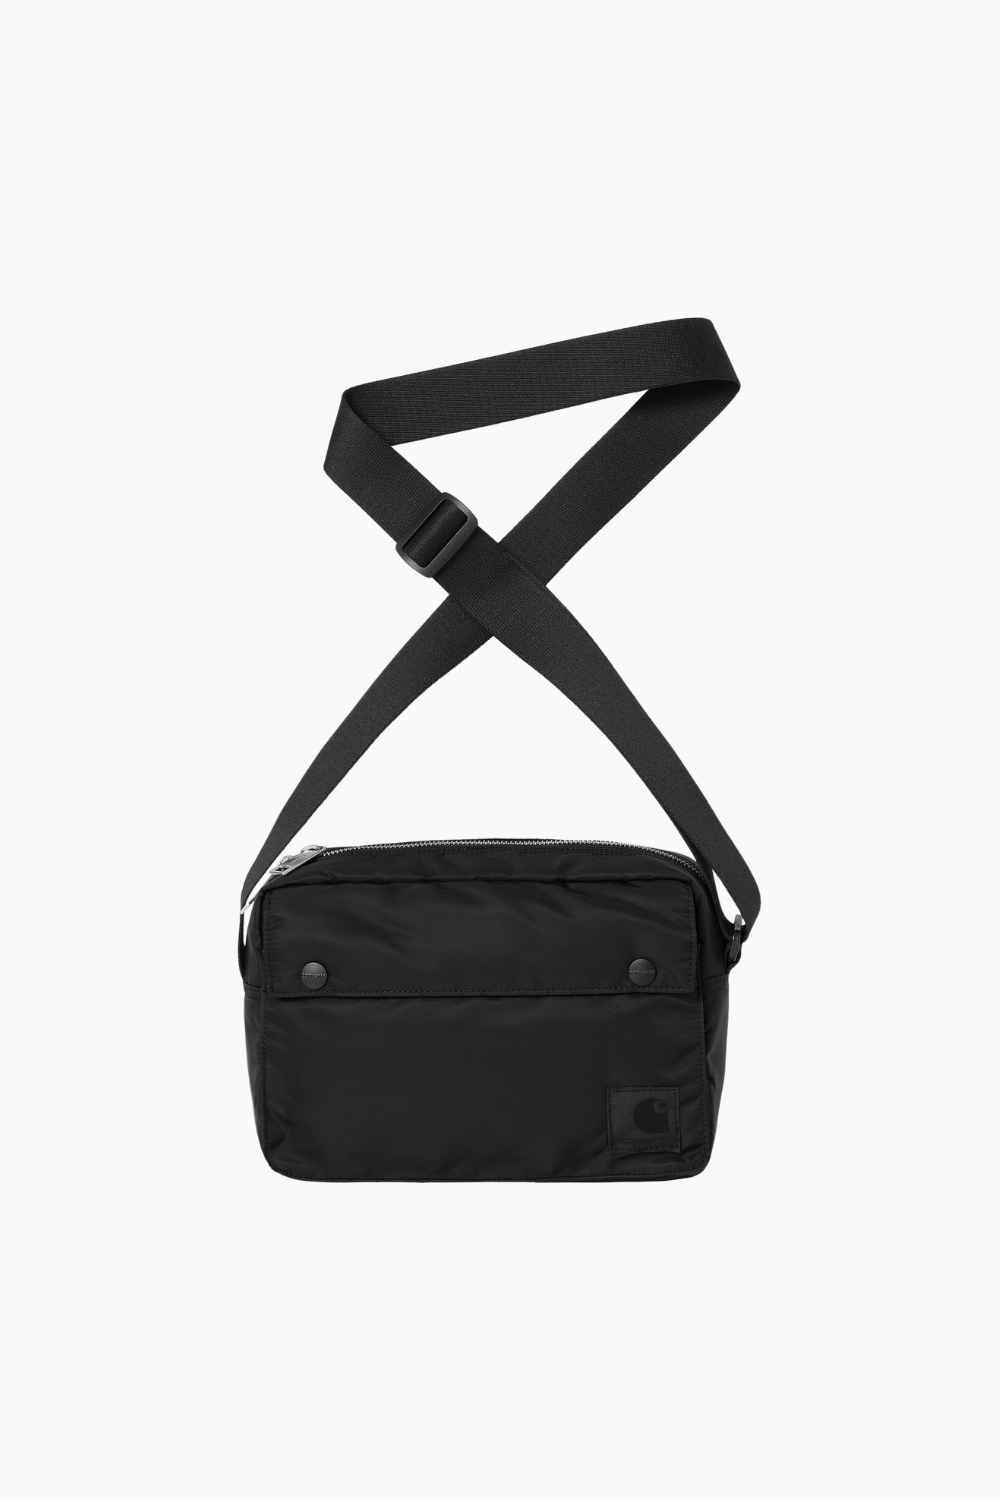 Otley Shoulder Bag - Black - Carhartt WIP